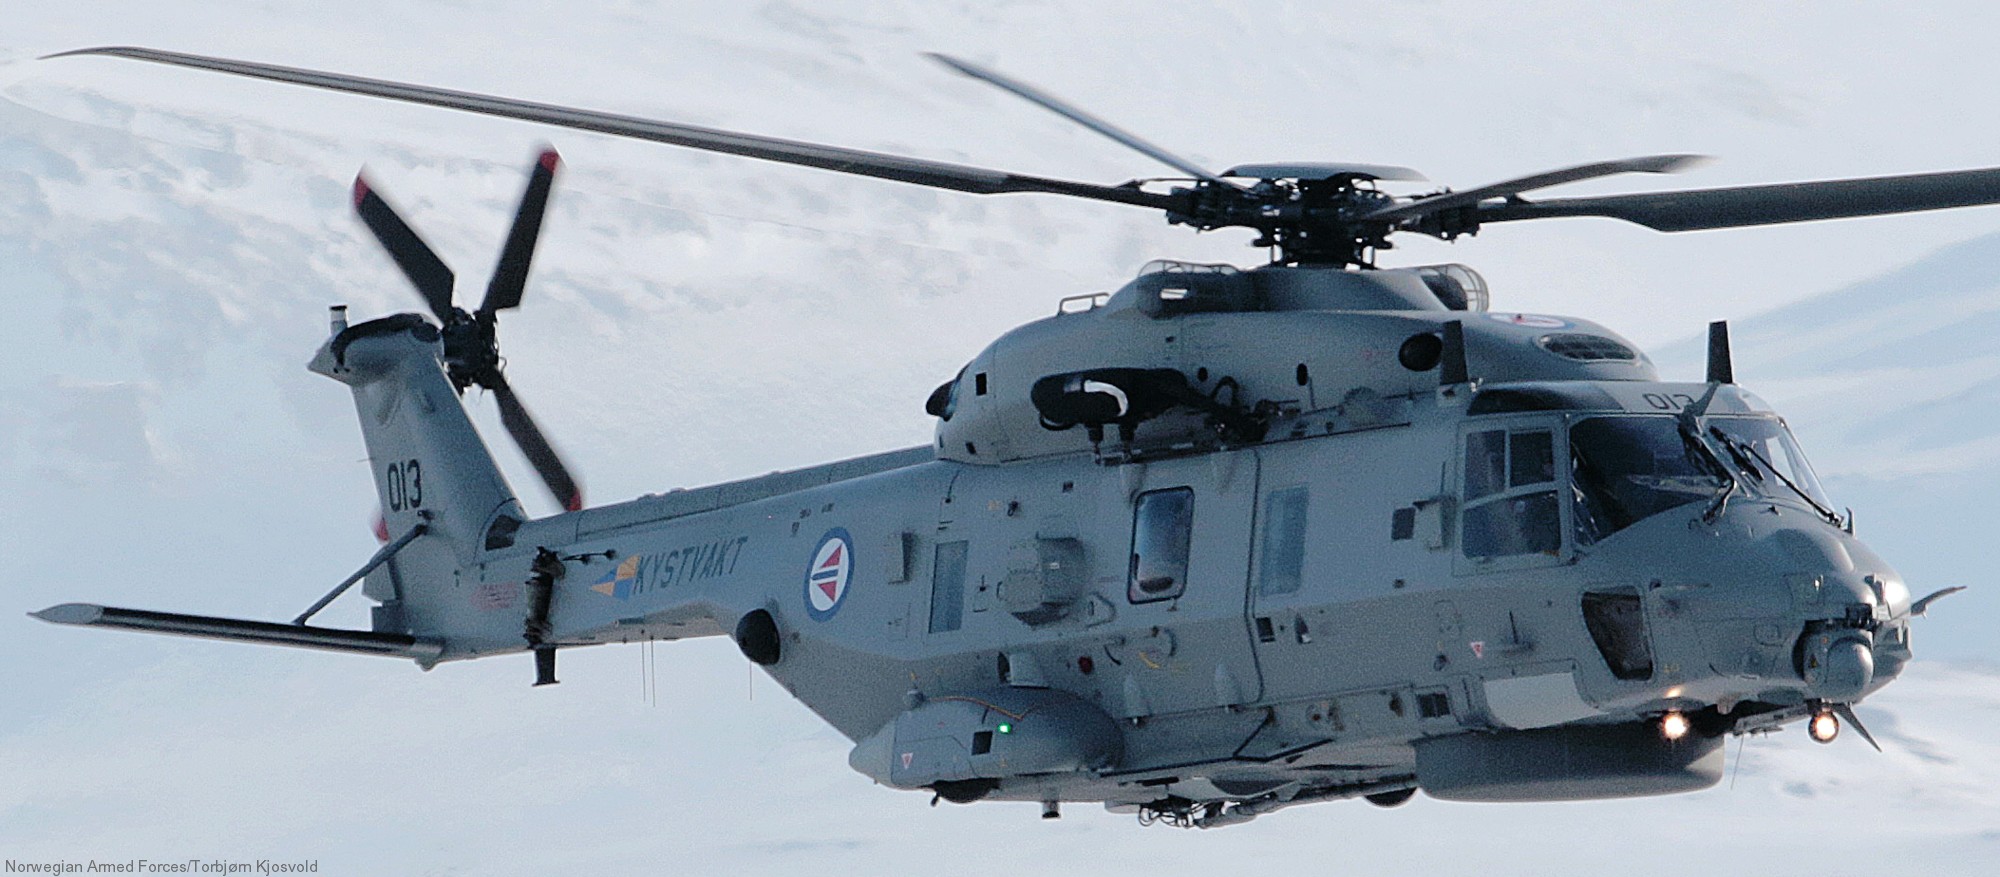 nh90 nfh asw helicopter royal norwegian coast guard navy air force kystvakt sjoforsvaret 013 03